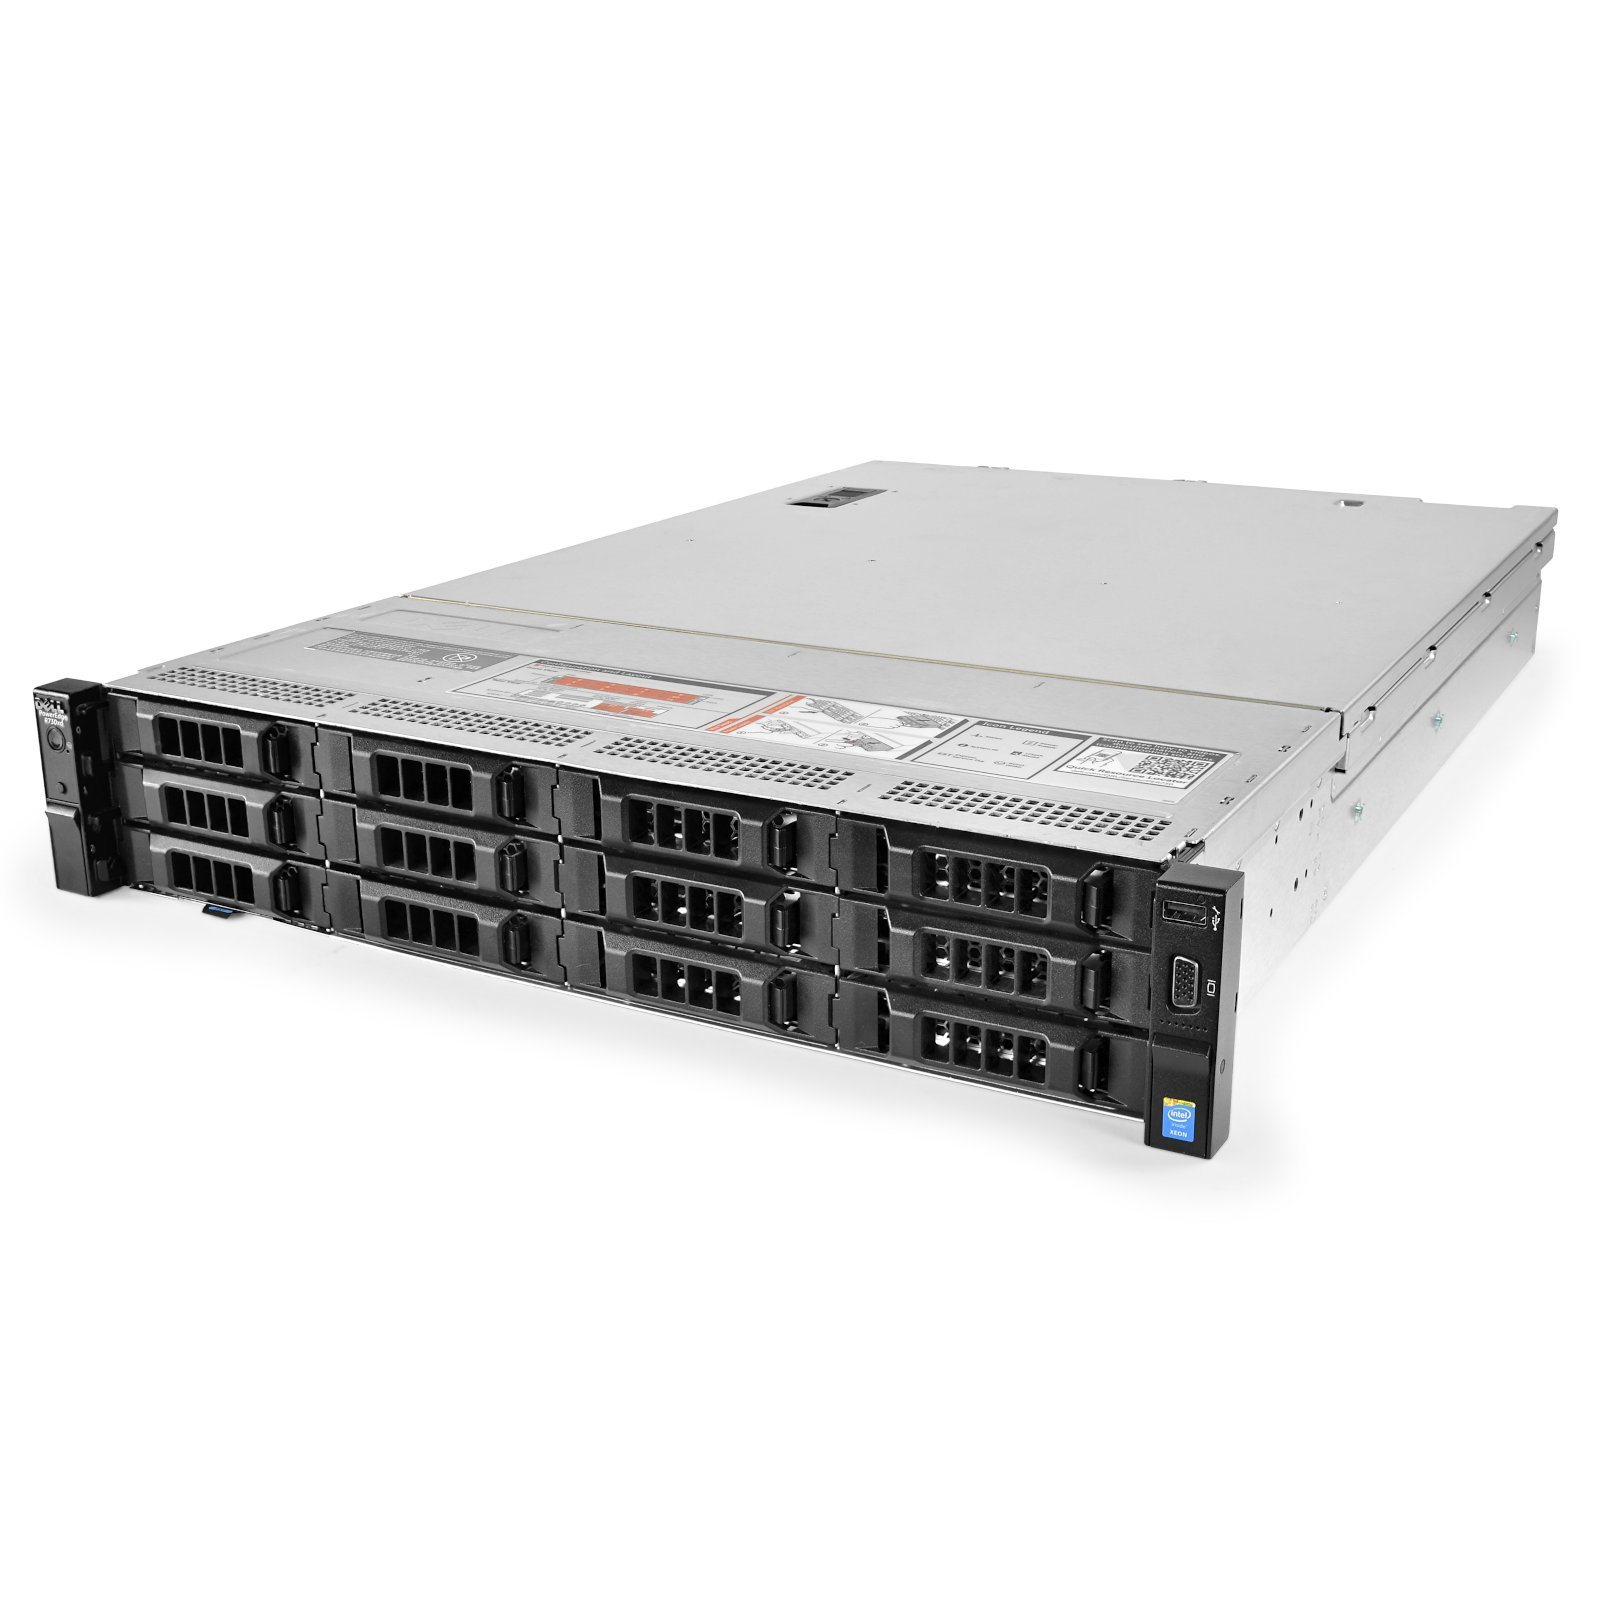 Подробное фото Сервер DELL PowerEdge R730XD Xeon 2x E5-2697Av4 256Gb 2133P DDR4 12x noHDD 3.5", SAS RAID Perc H730 mini, 1024Mb, 2*PSU 750W